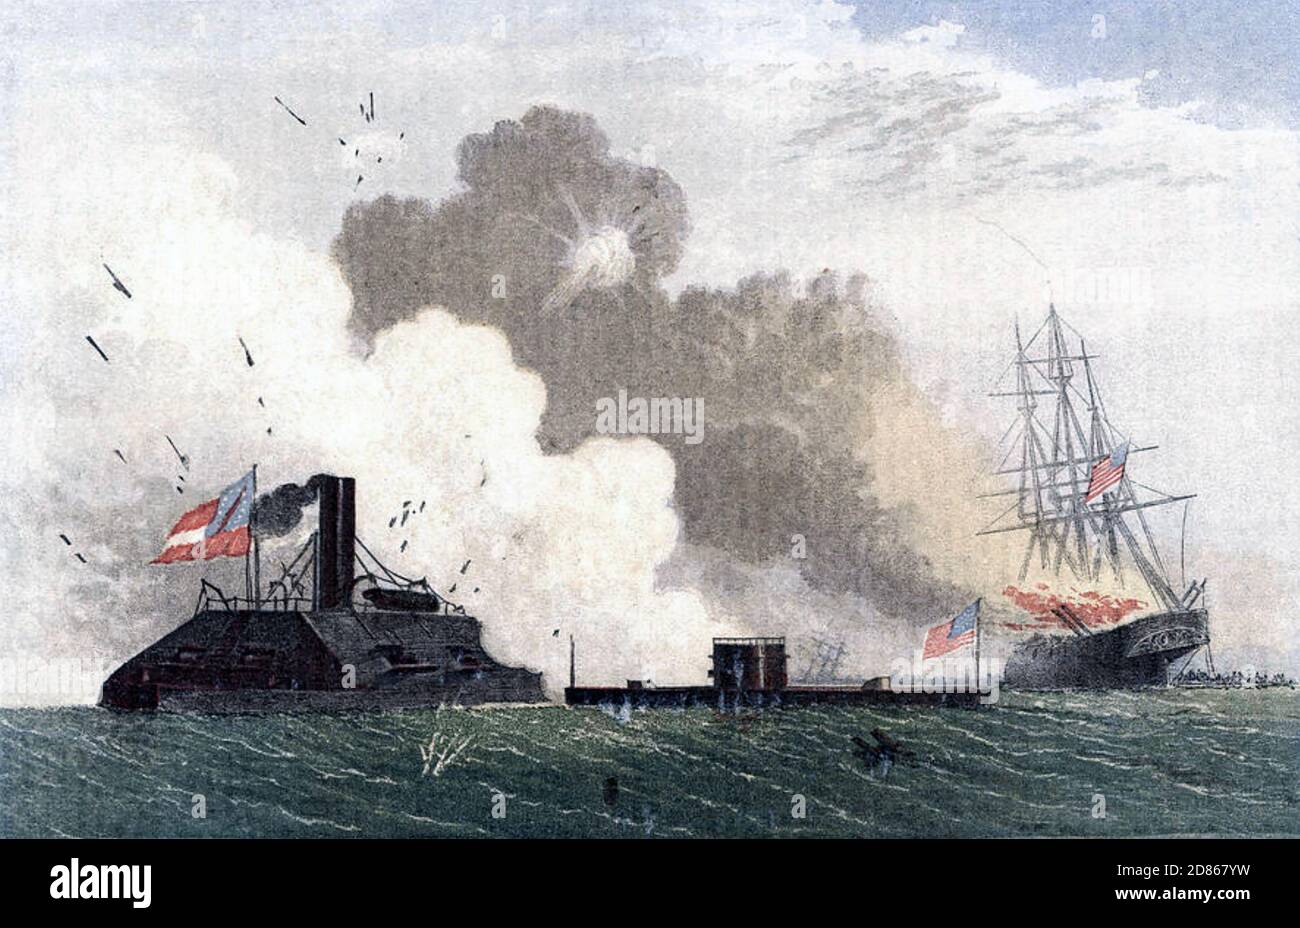 BATTLE OF HAMPTON ROADS March 8-9 1862. From left Confederate ironclad gunship Virginia, USS Monitor, USS Cumberland. Stock Photo